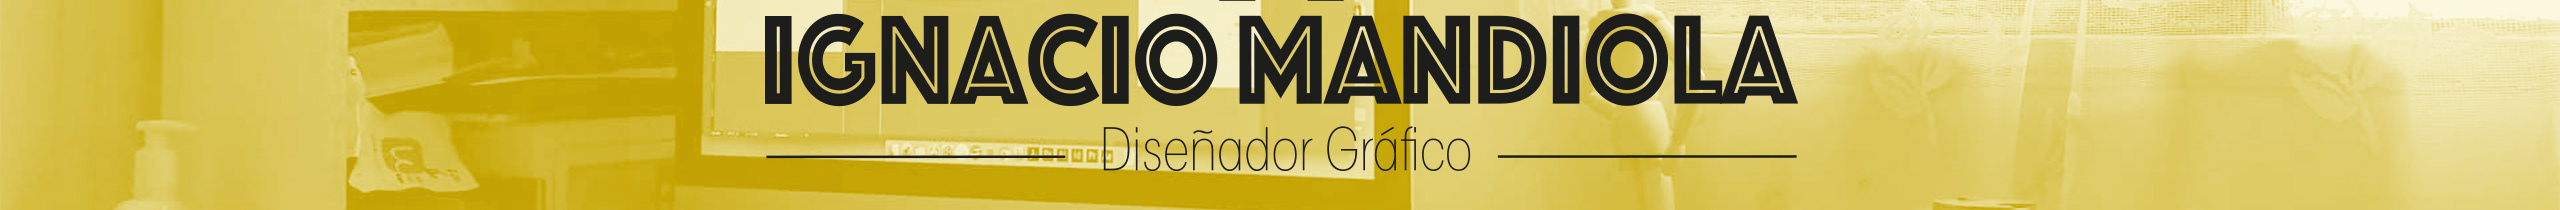 Ignacio Mandiola's profile banner